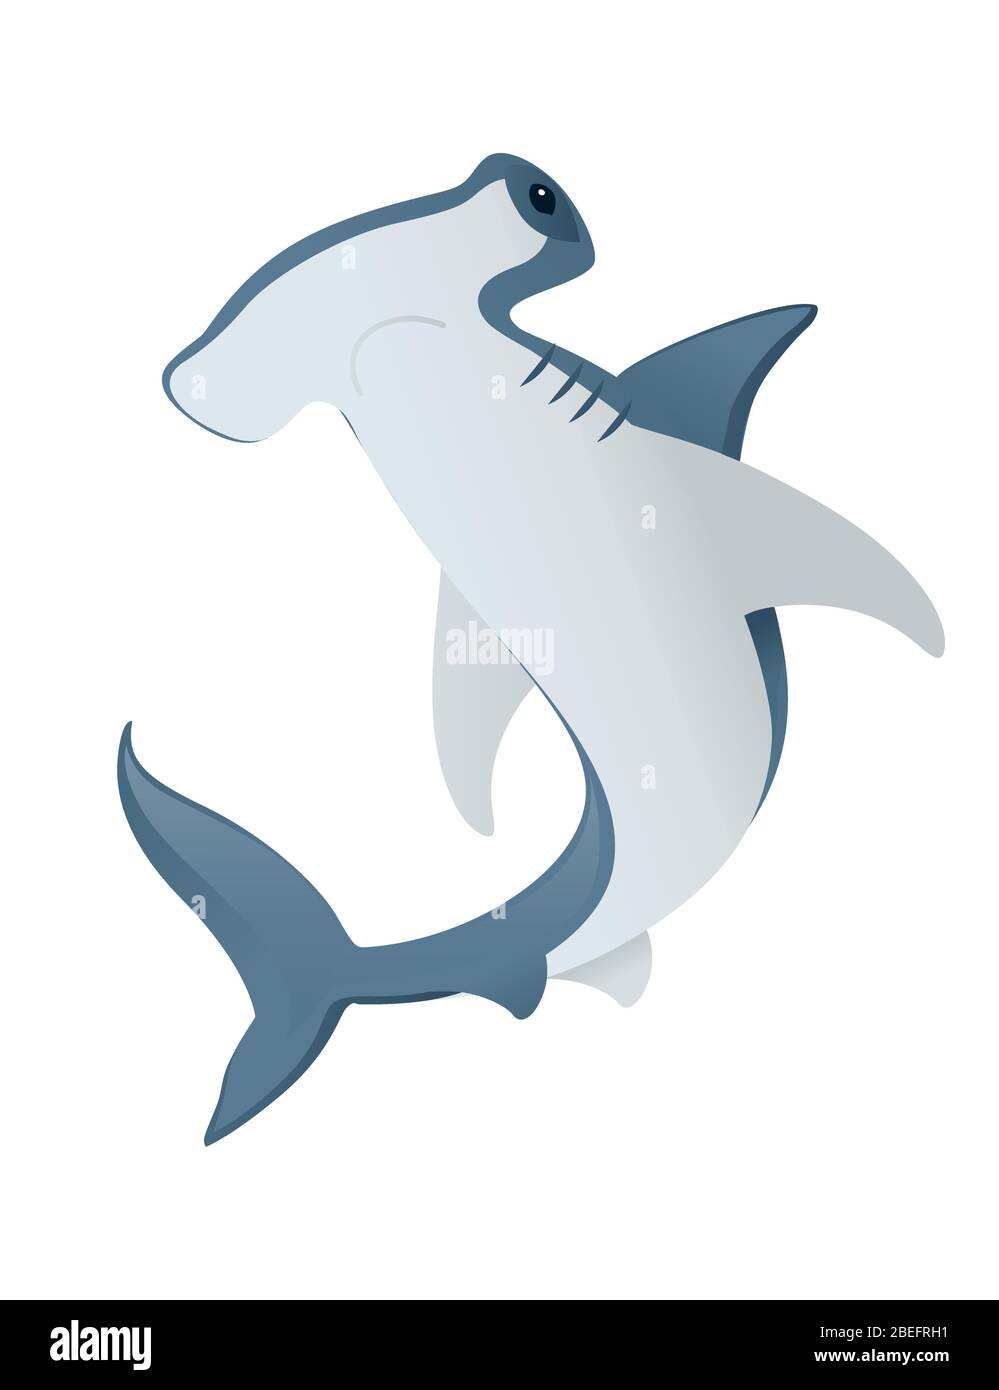 Hammerhead shark underwater giant animal simple cartoon character design flat vector illustration isolated on white background Stock Vector